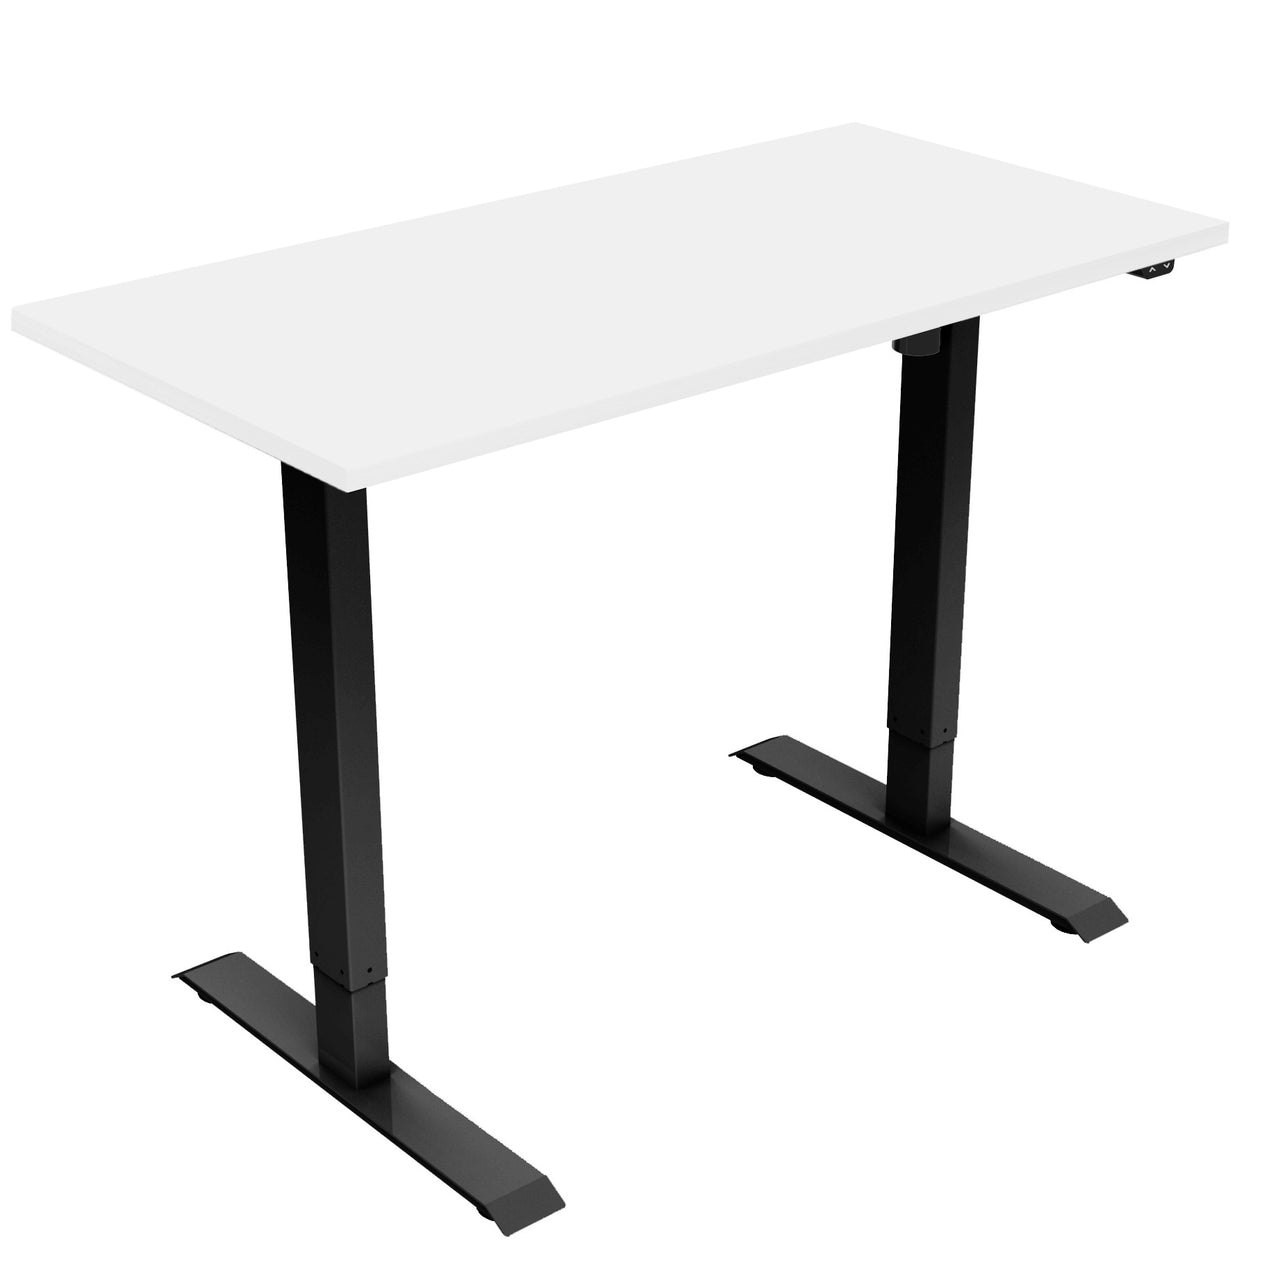 White height-adjustable desk with black metal frame